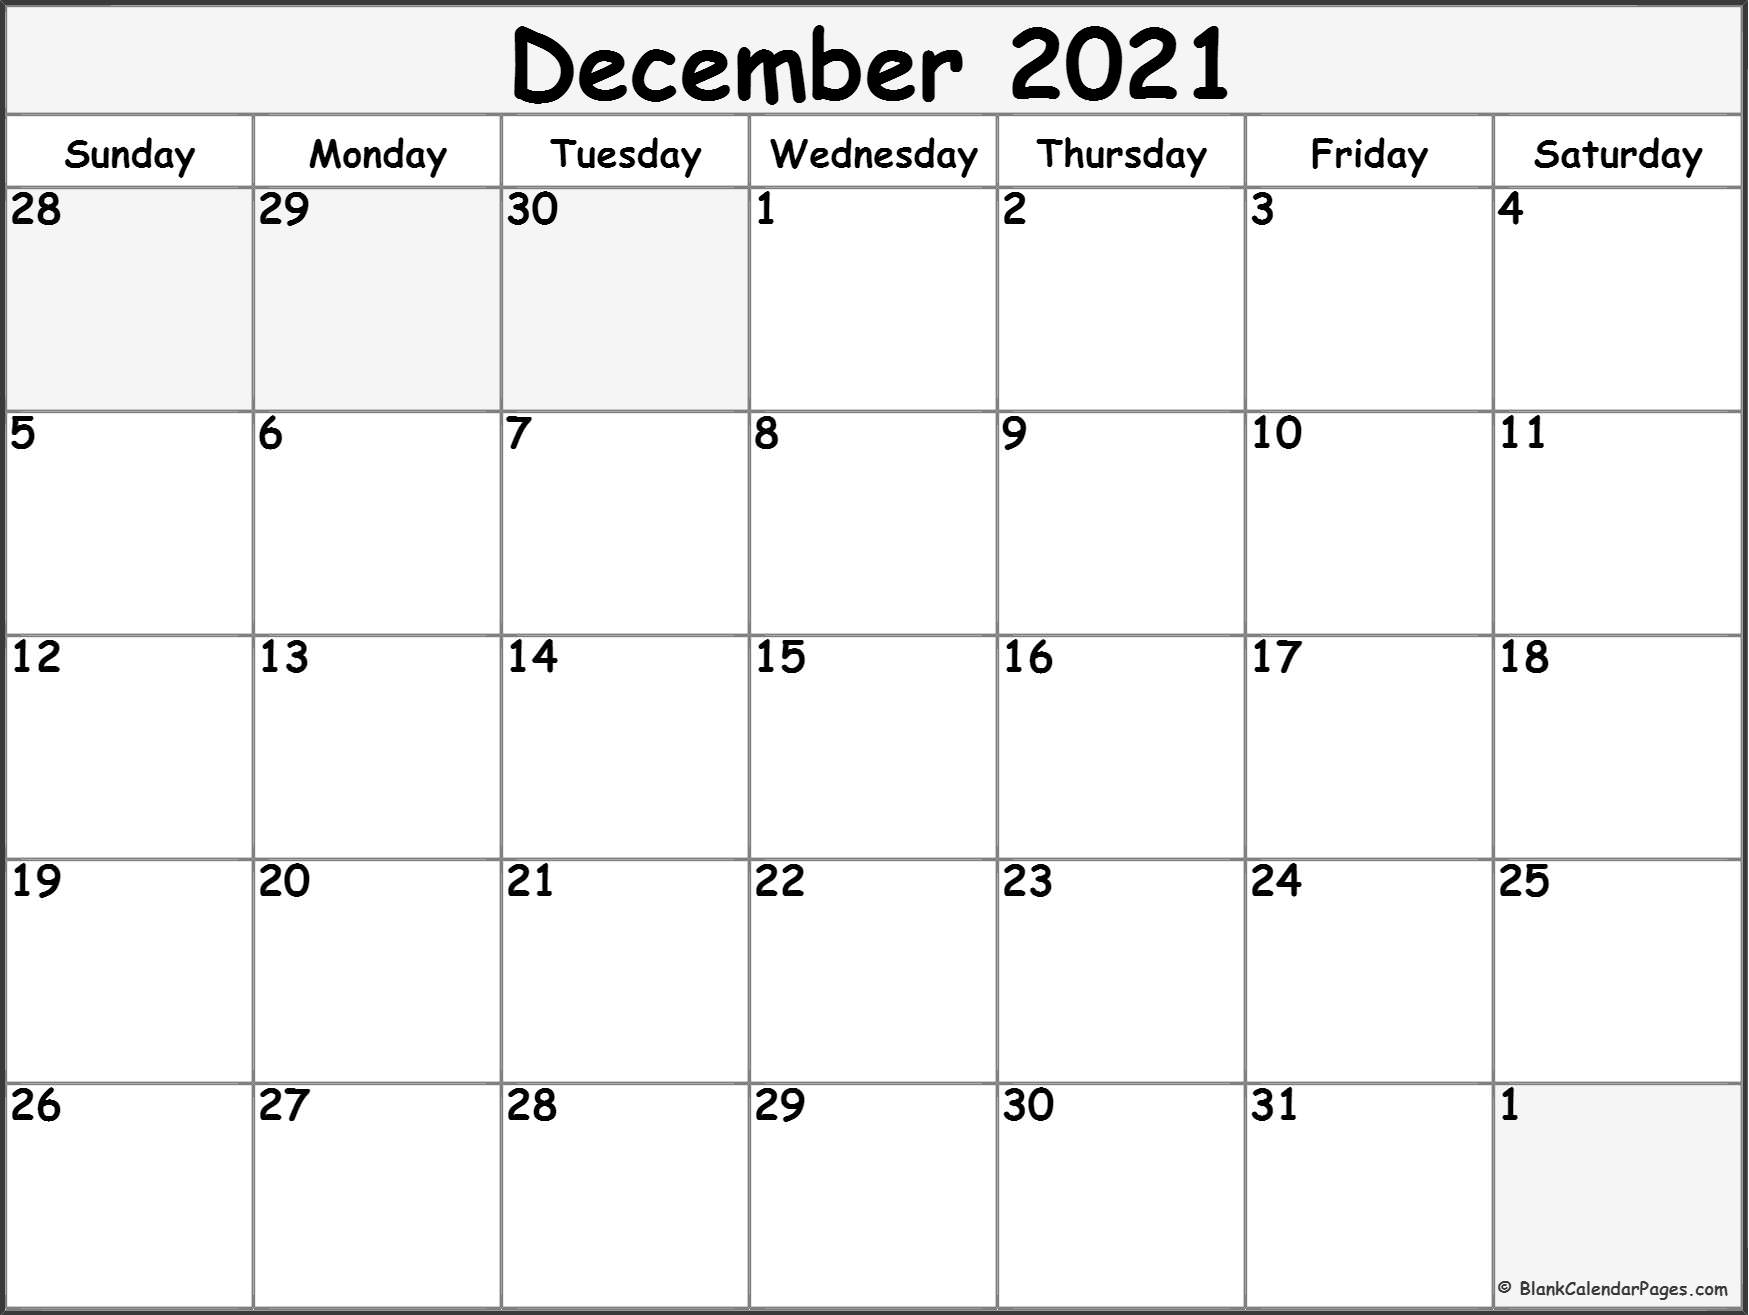 December 2021 Blank Calendar Templates 1